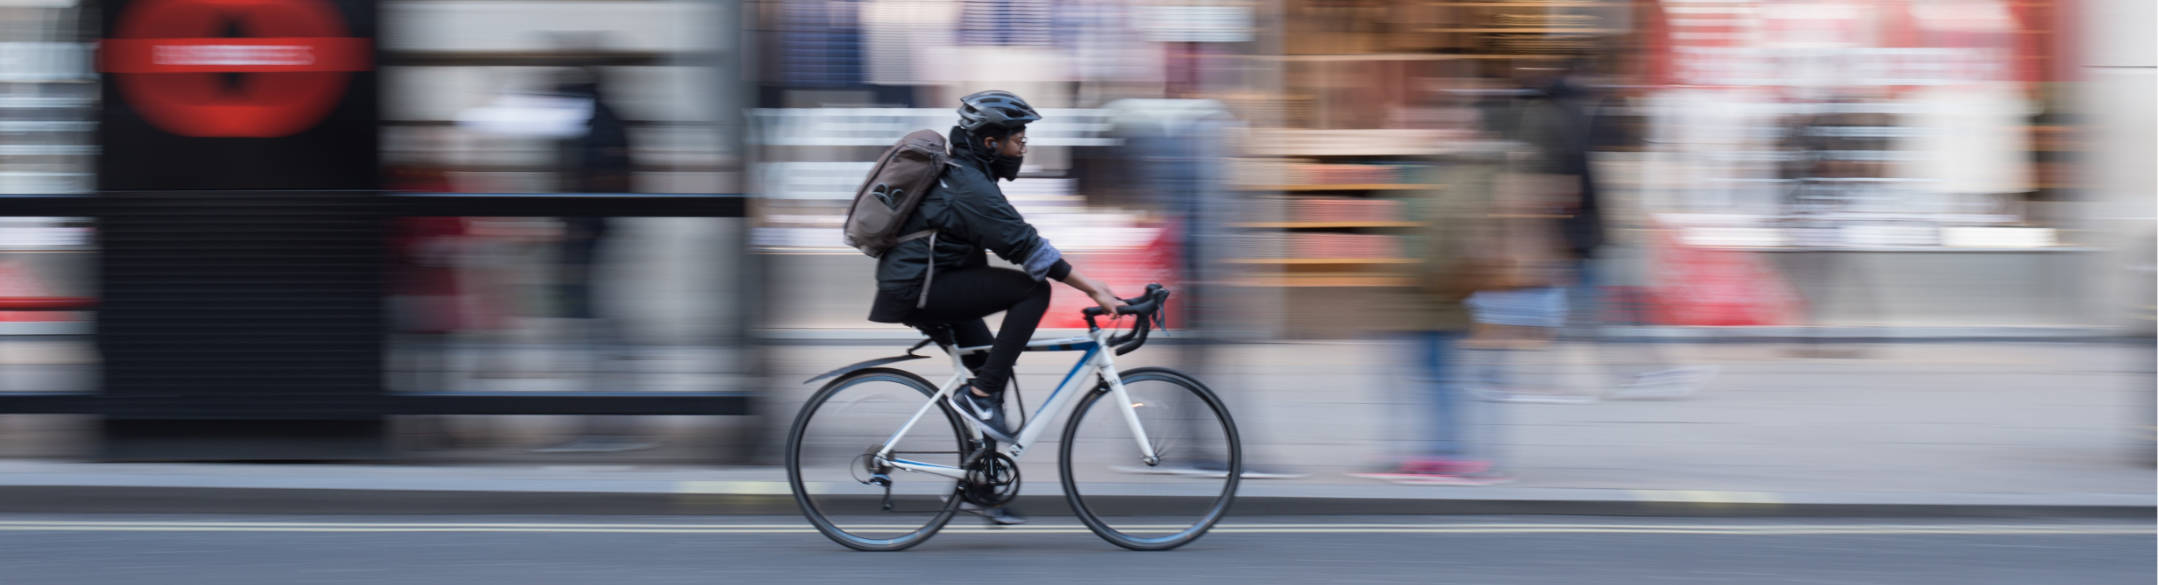 Bike rider on busy city street